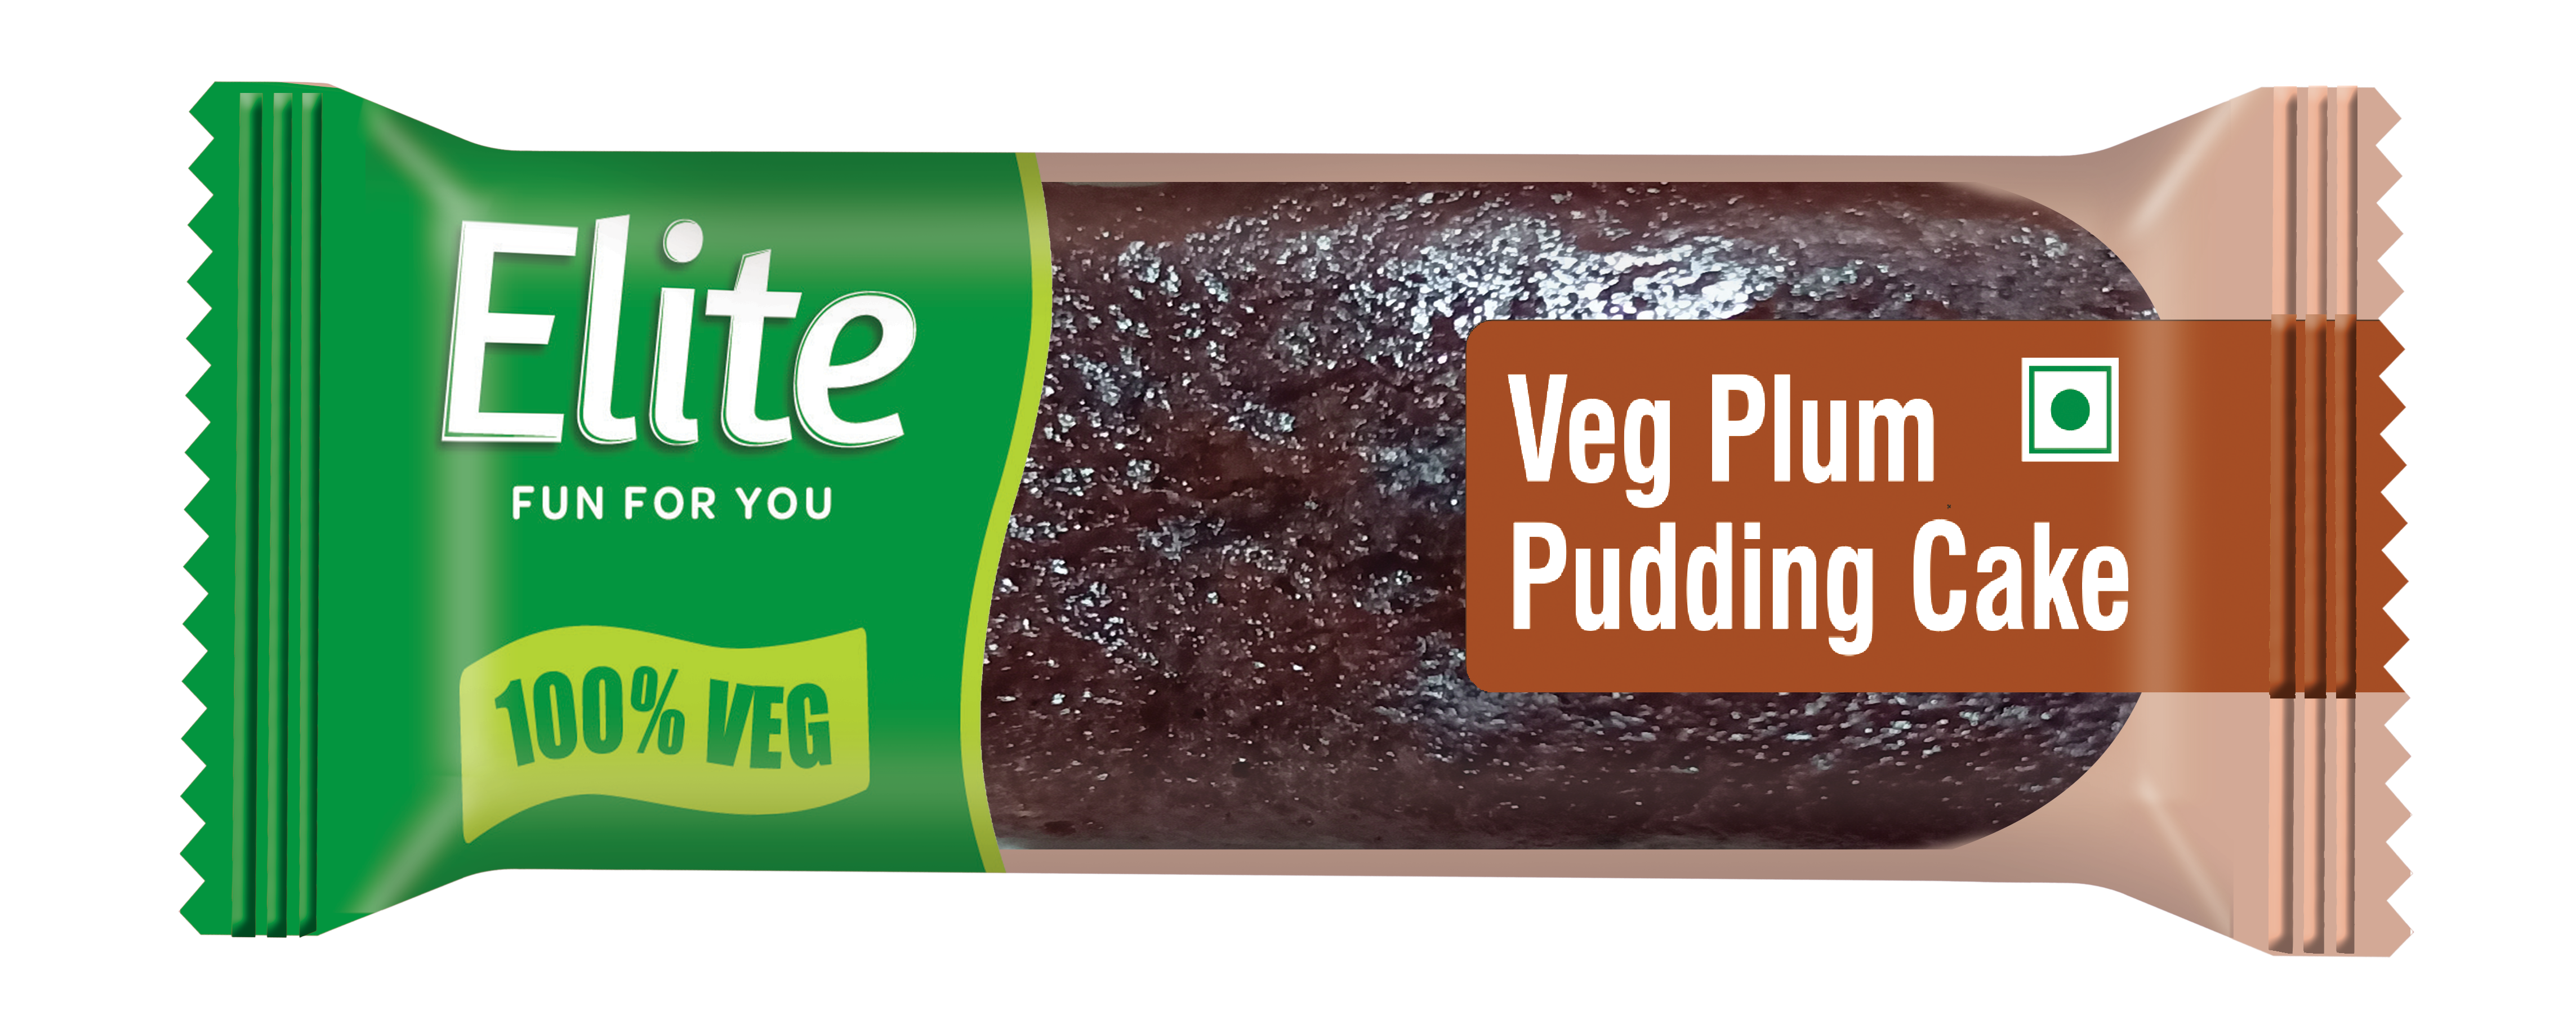 Veg Plum Pudding